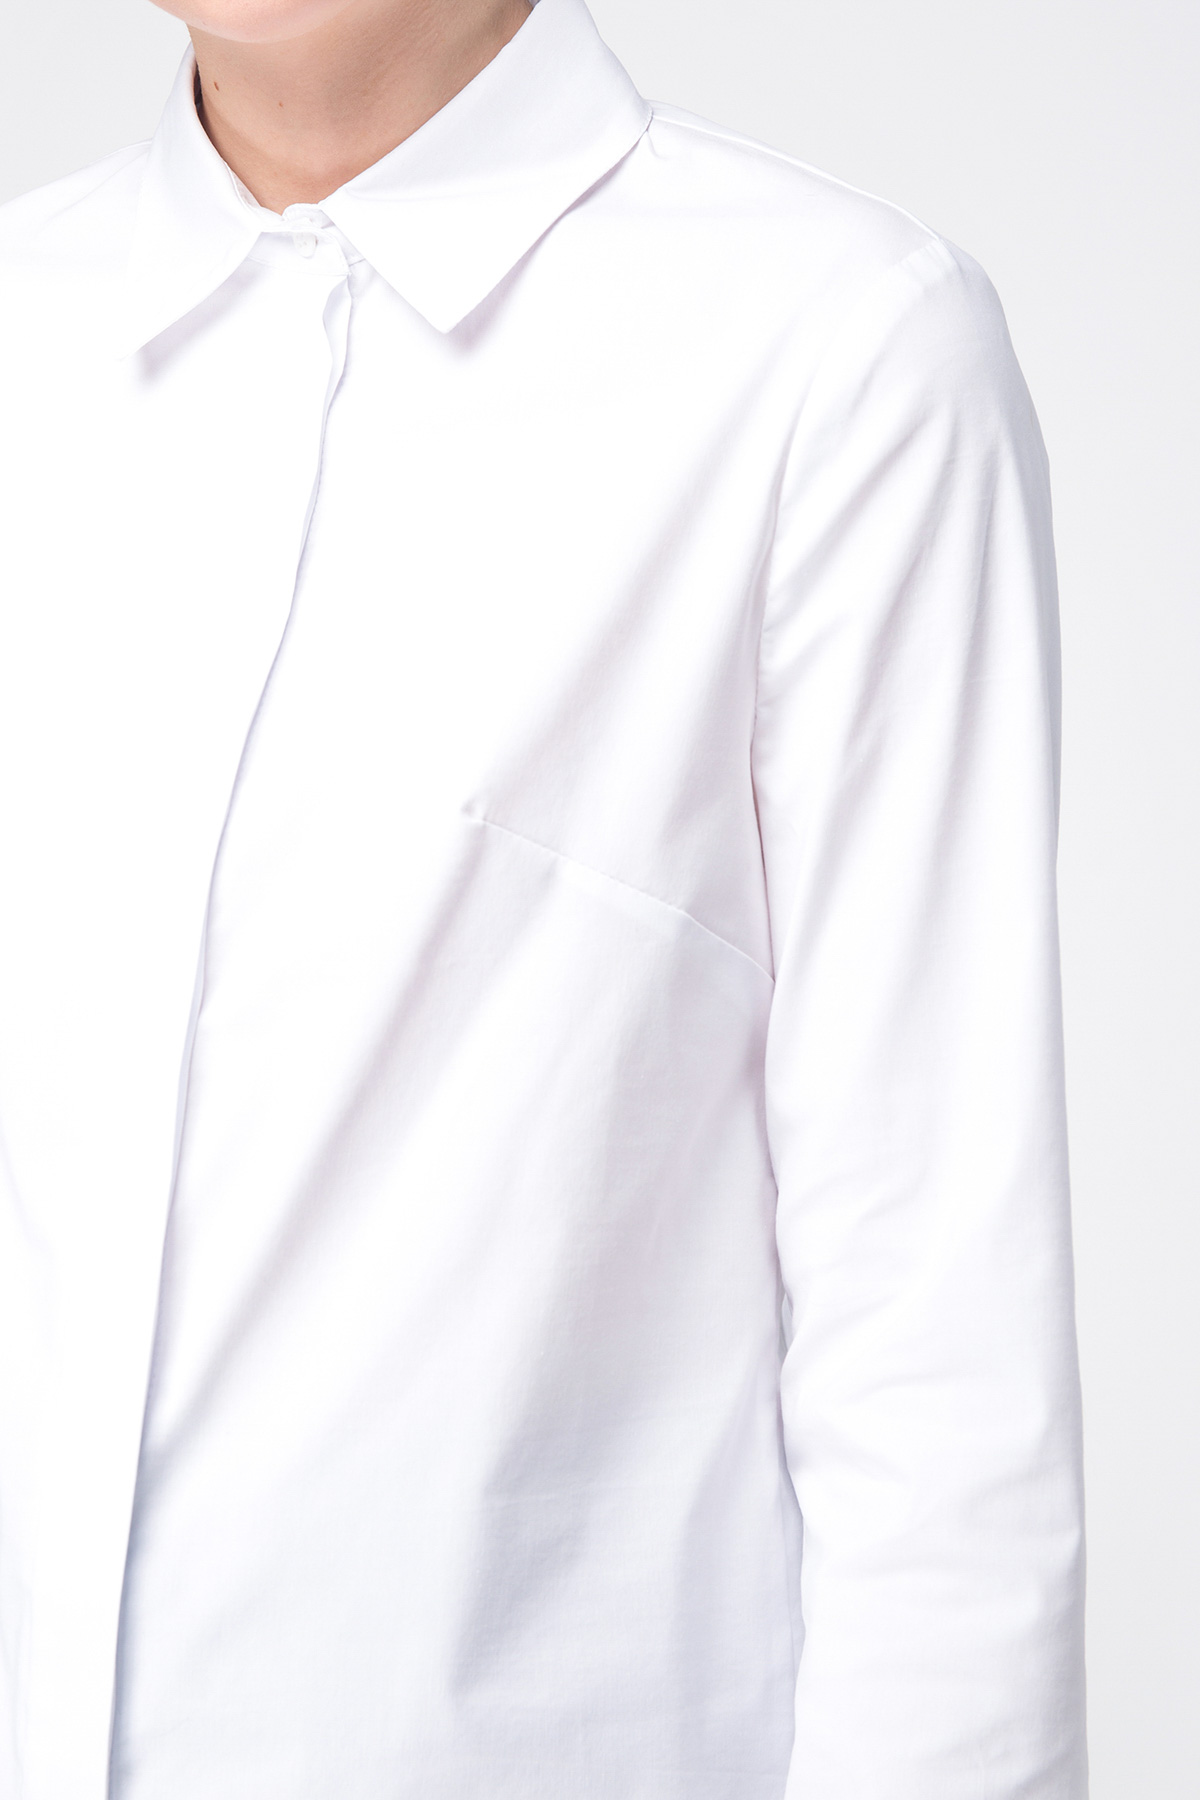 White long shirt, photo 7